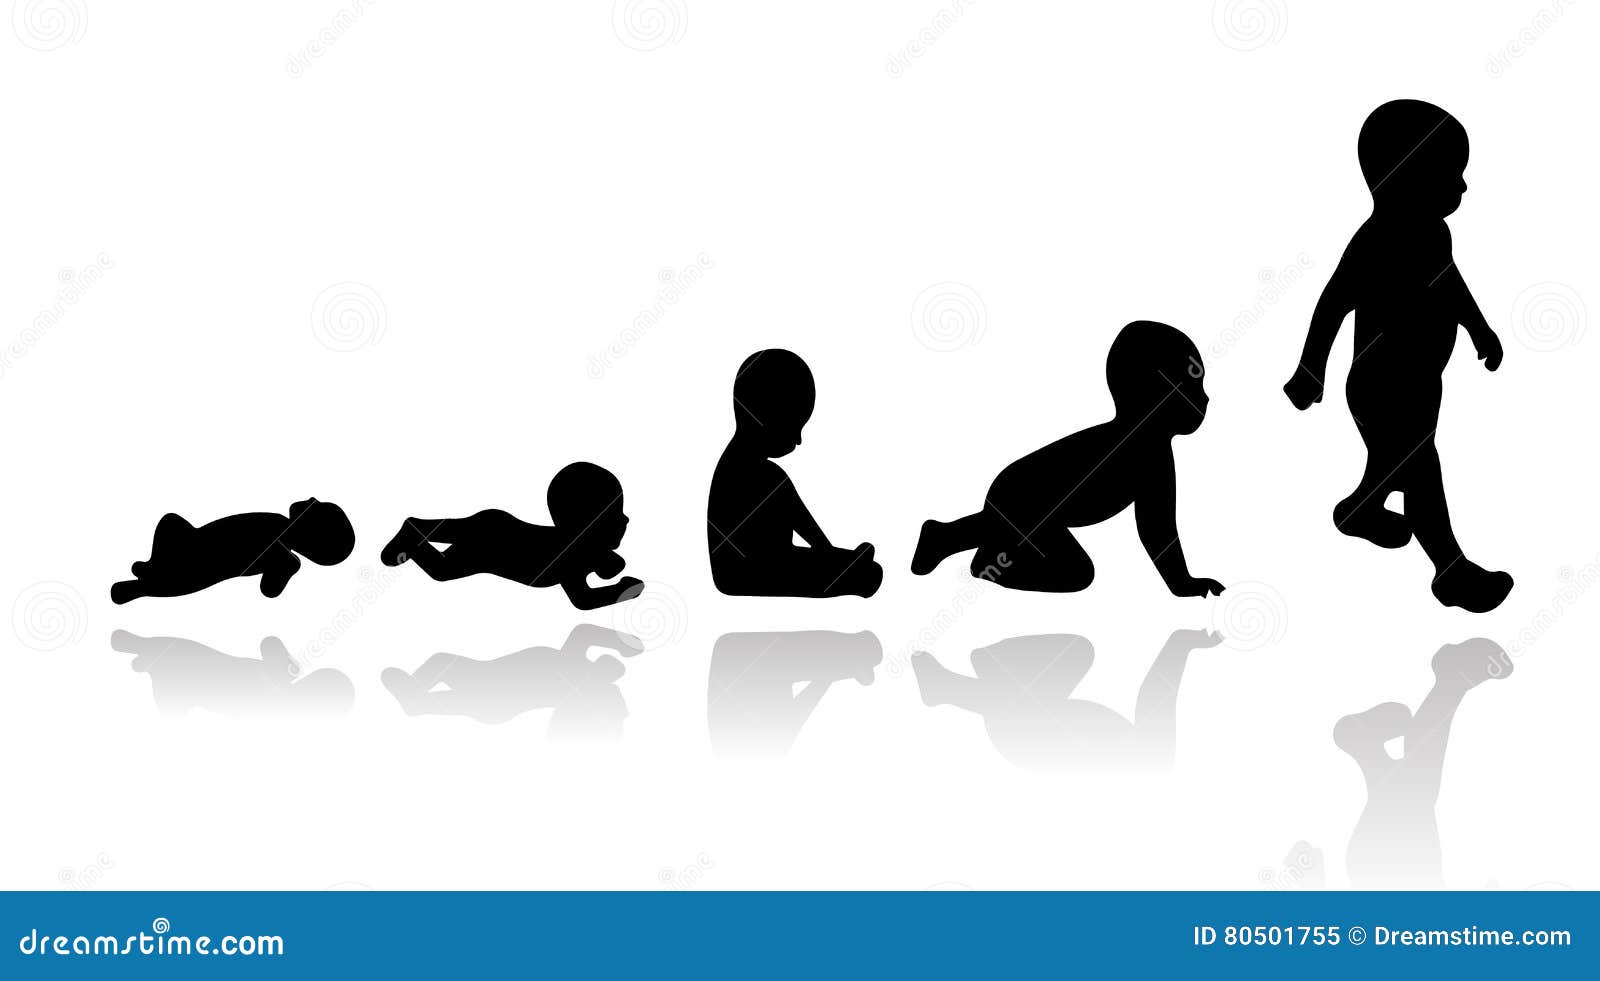 Babyevolutie Vector Illustratie Stock Illustratie - Illustration of ...